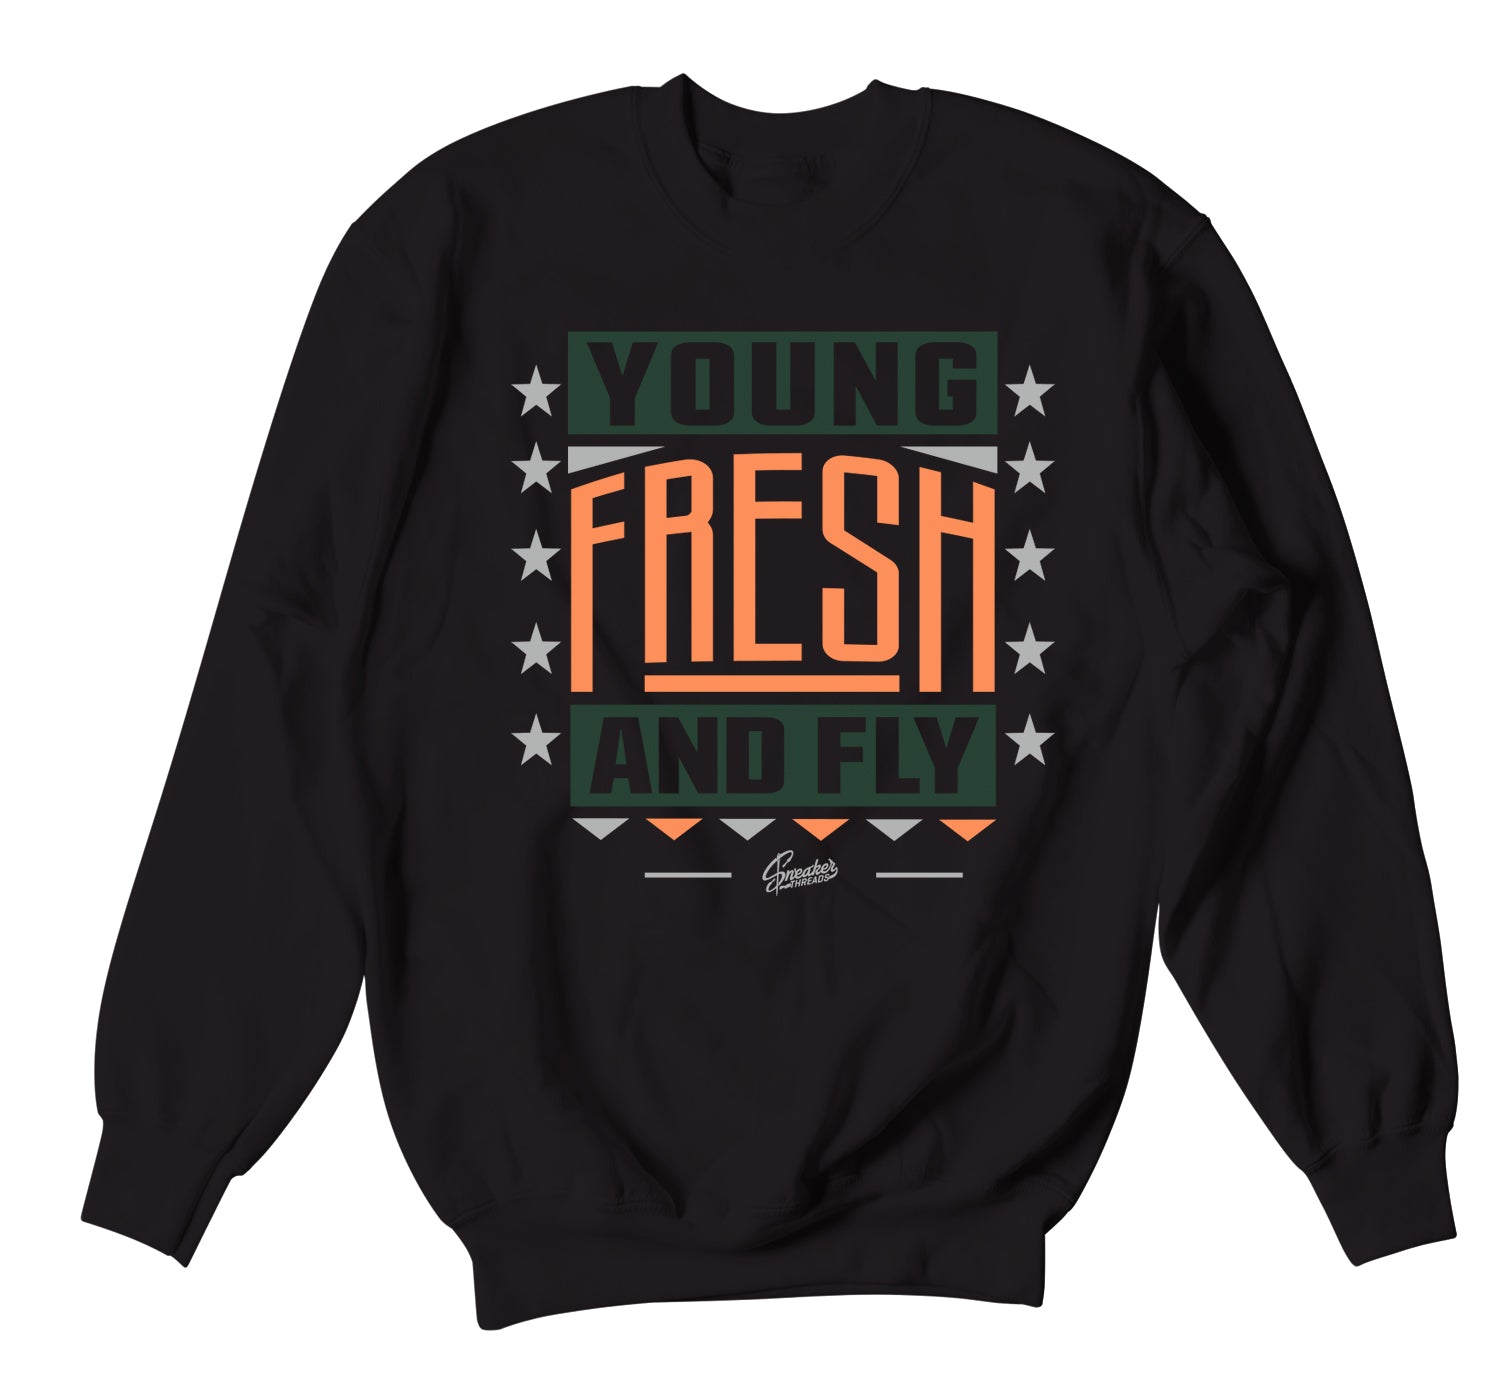 700 Wash Orange Sweater - Young Fresh - Black